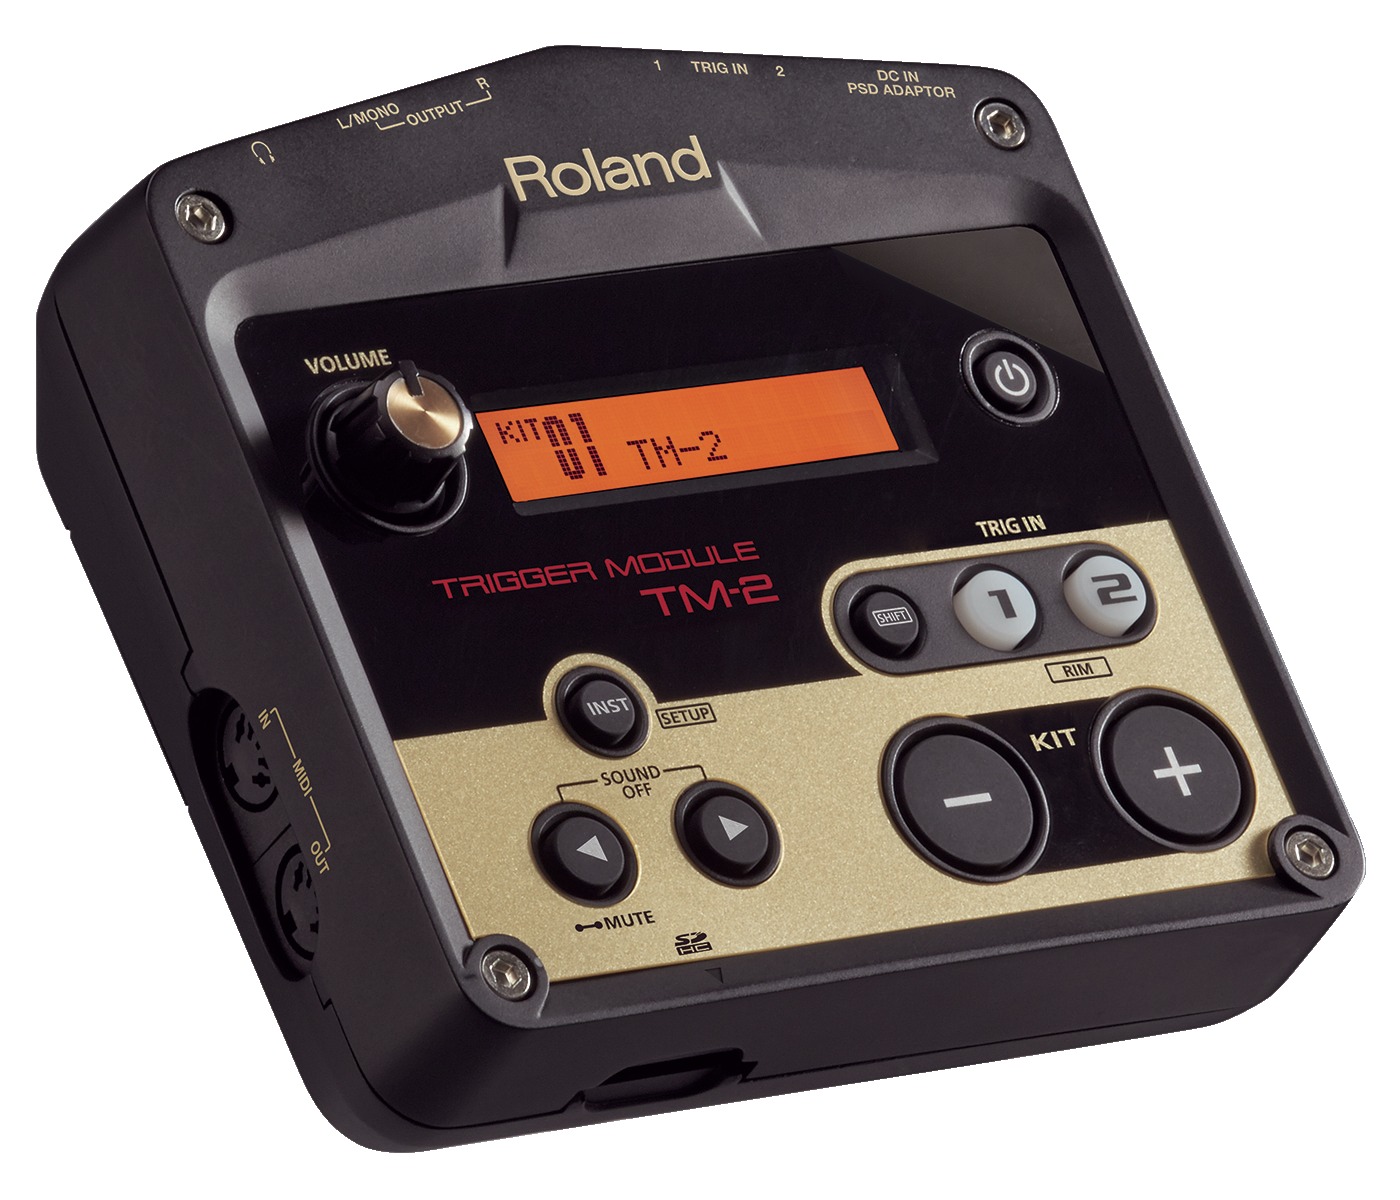 Roland Tm-2 Trigger Module - Electronic drum sound module - Variation 2